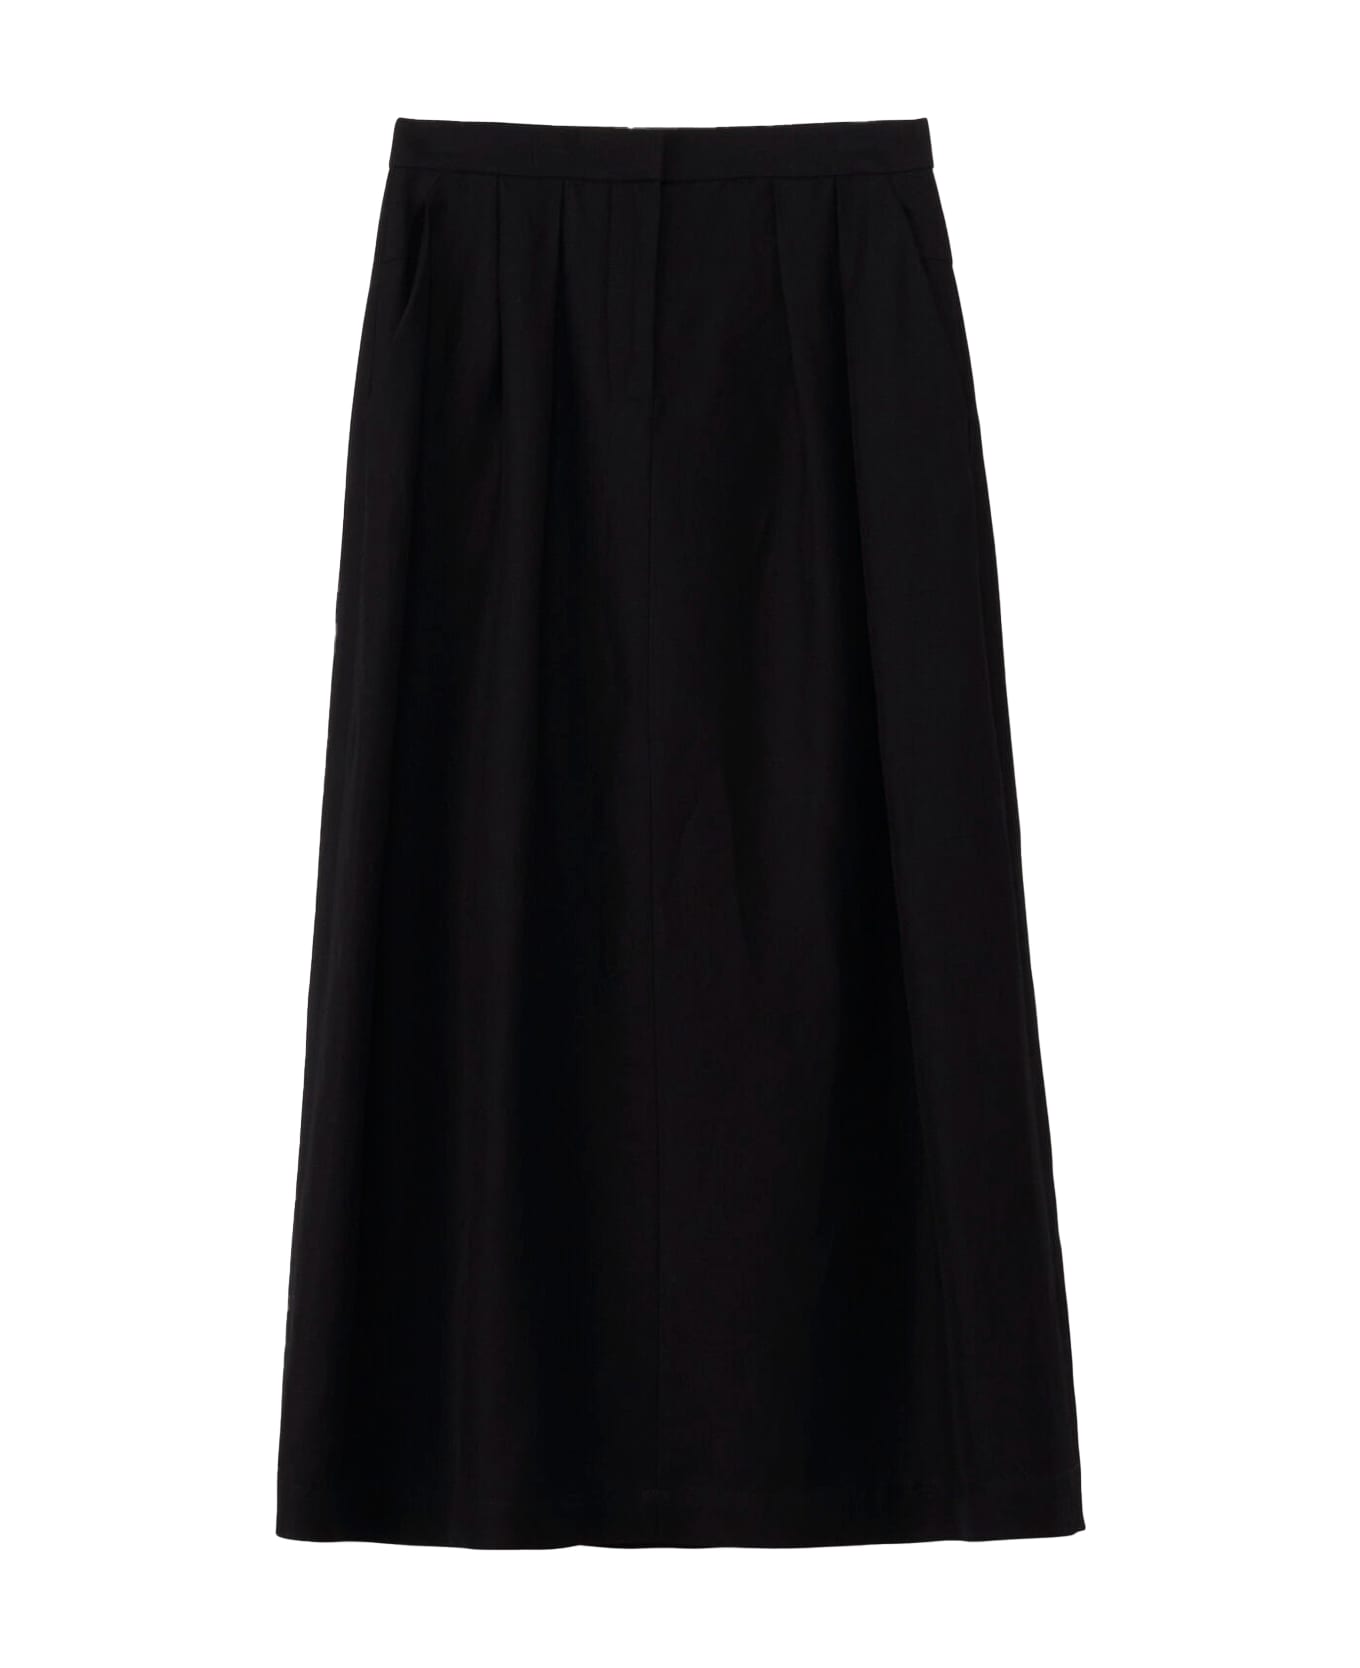 Fabiana Filippi Long Black Skirt In Linen And Viscose Blend - NERO